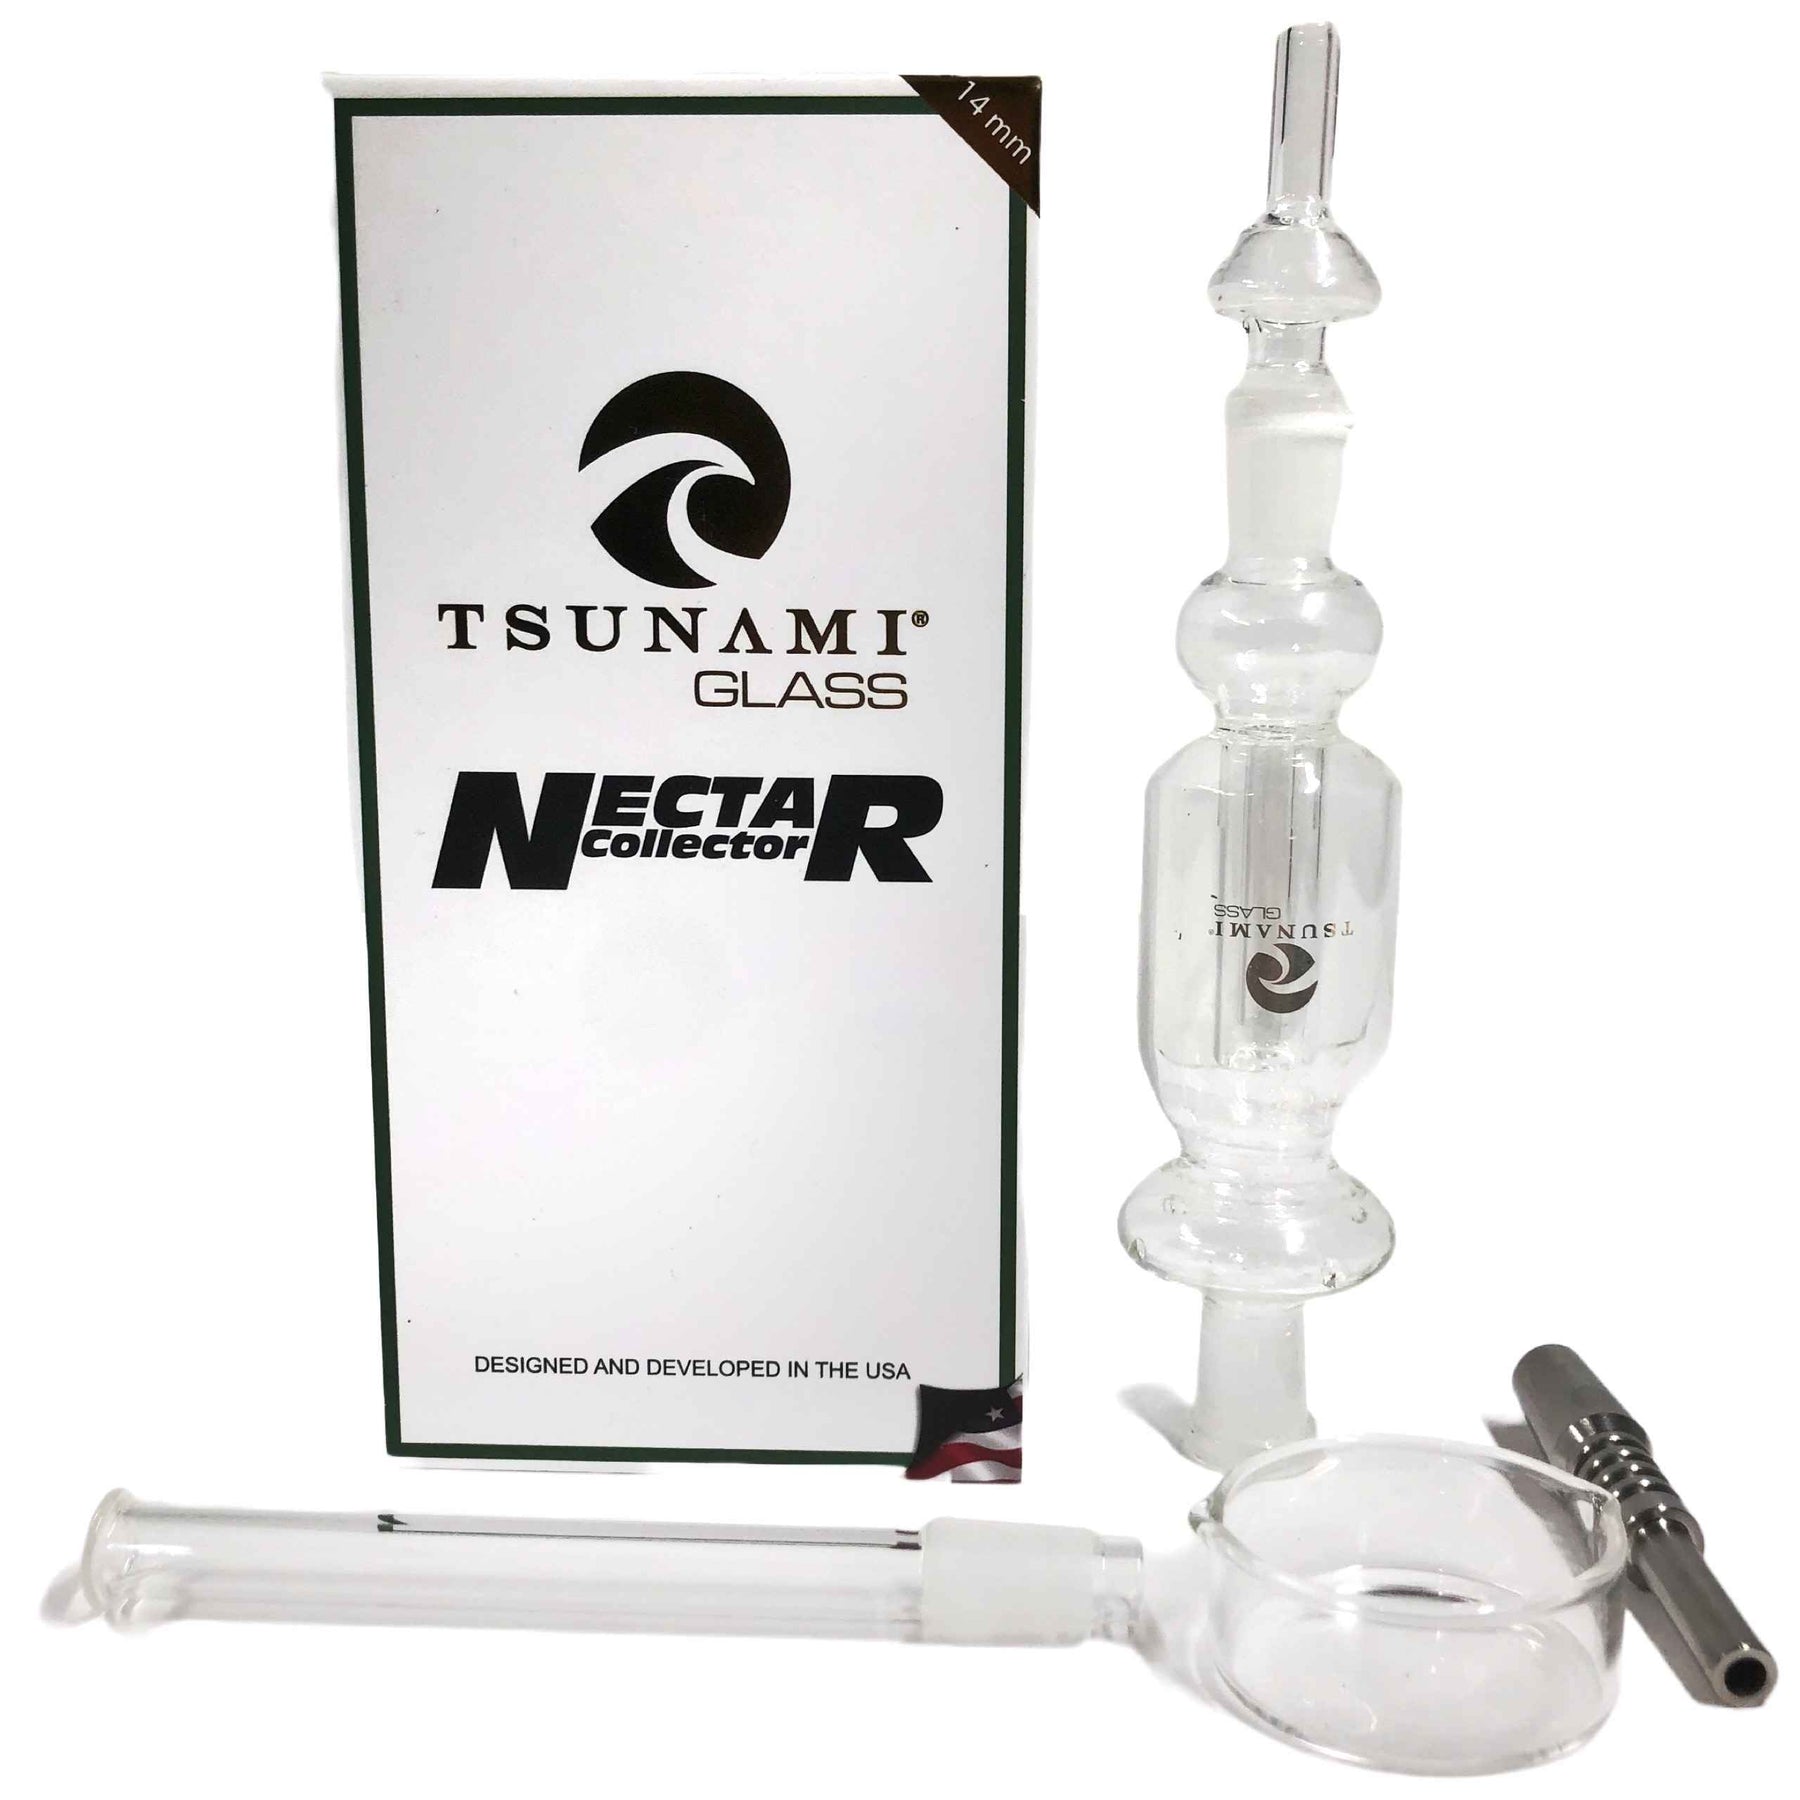     Tsunami Glass Nectar Collector Kit View